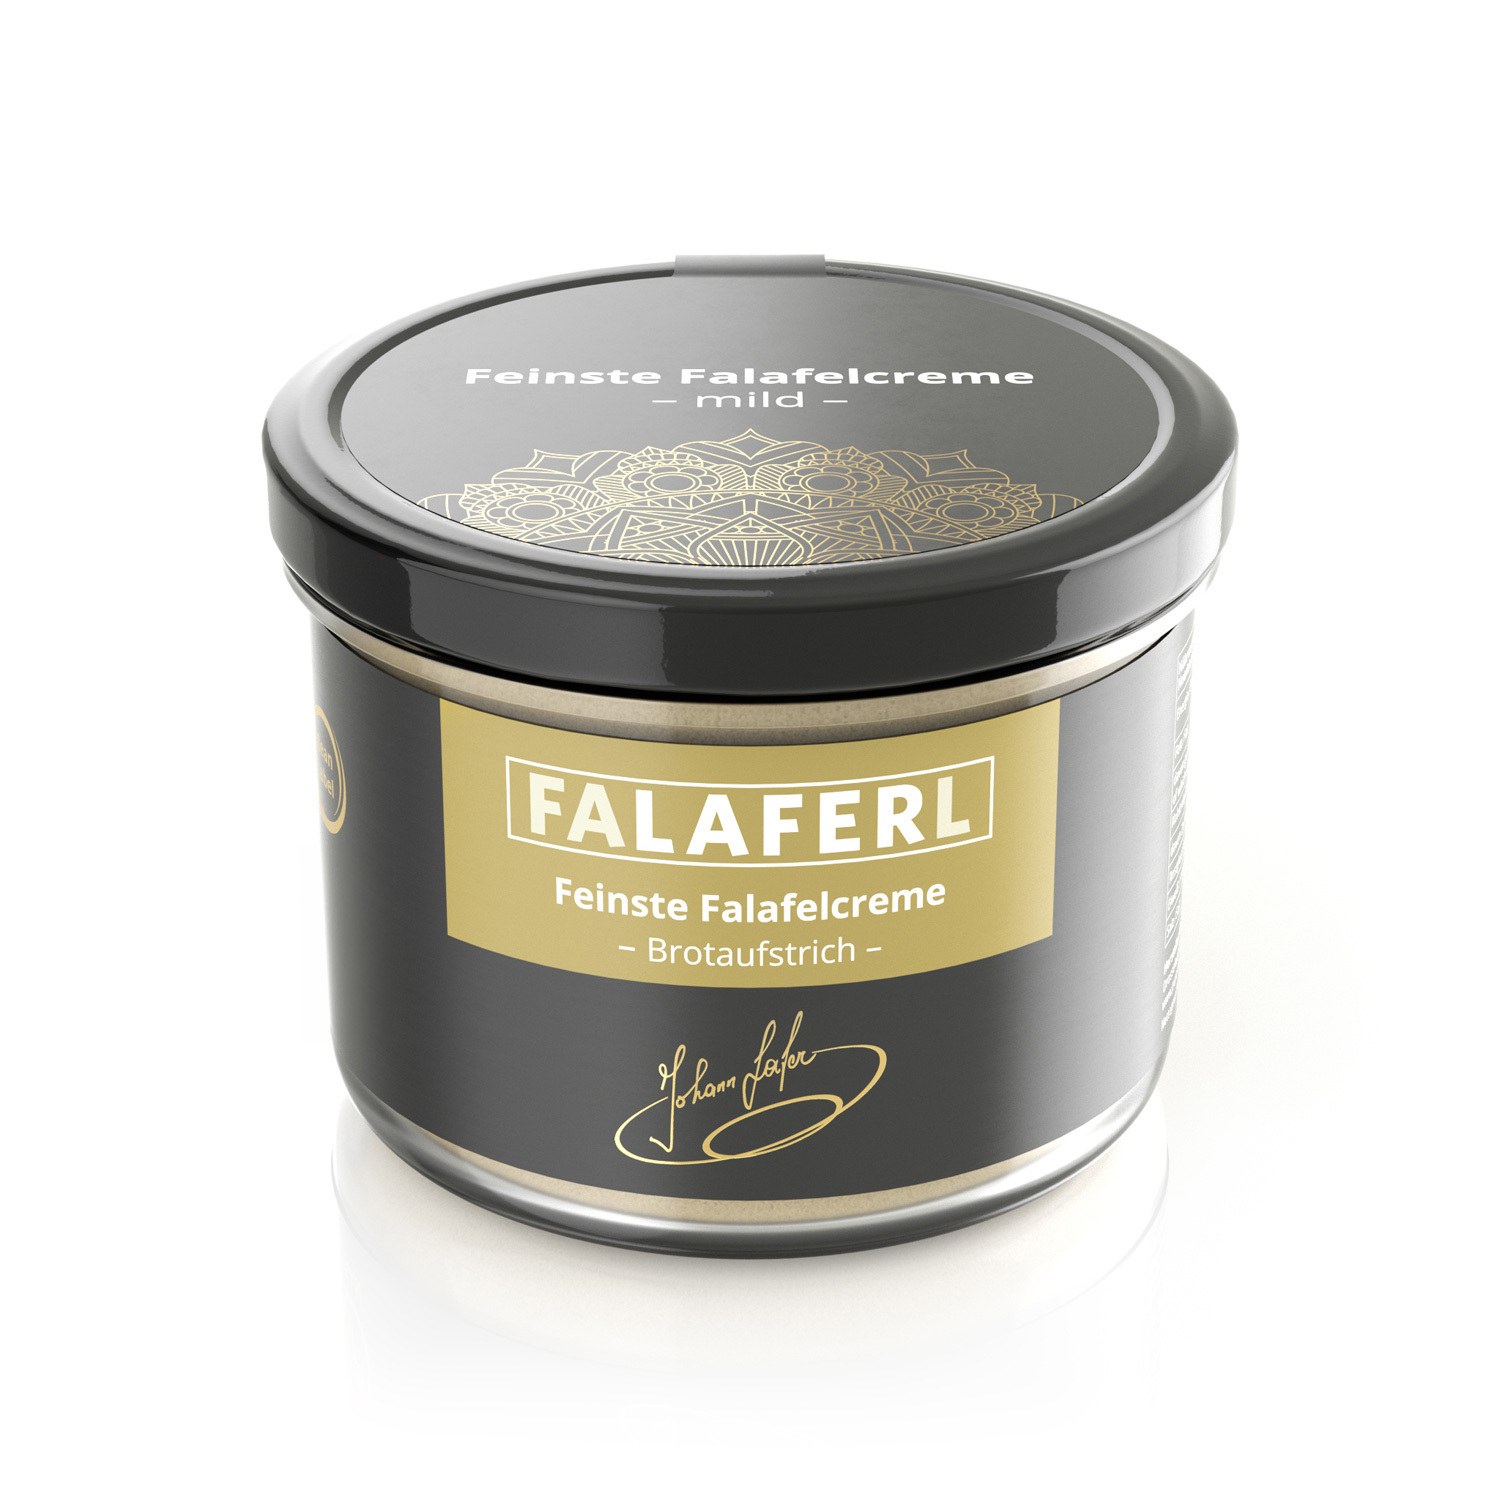 Feinste Falafelcreme -mild-